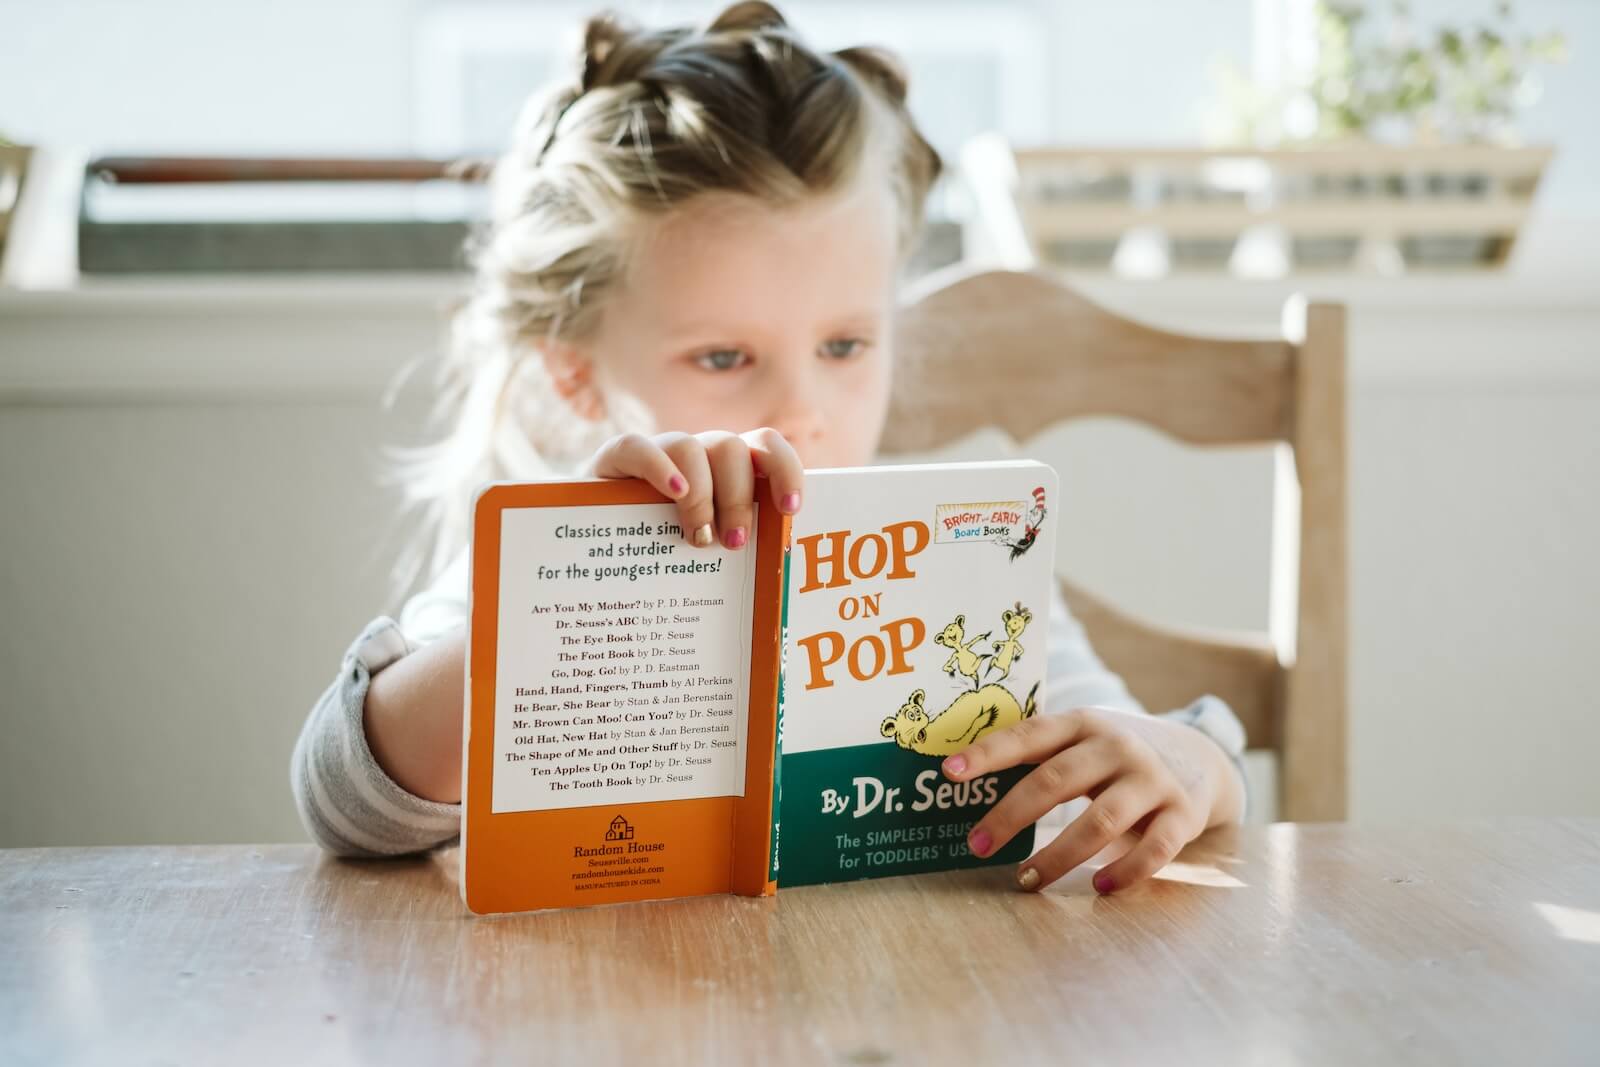 A little girl reading "Hop on Pop" by Dr. Seuss